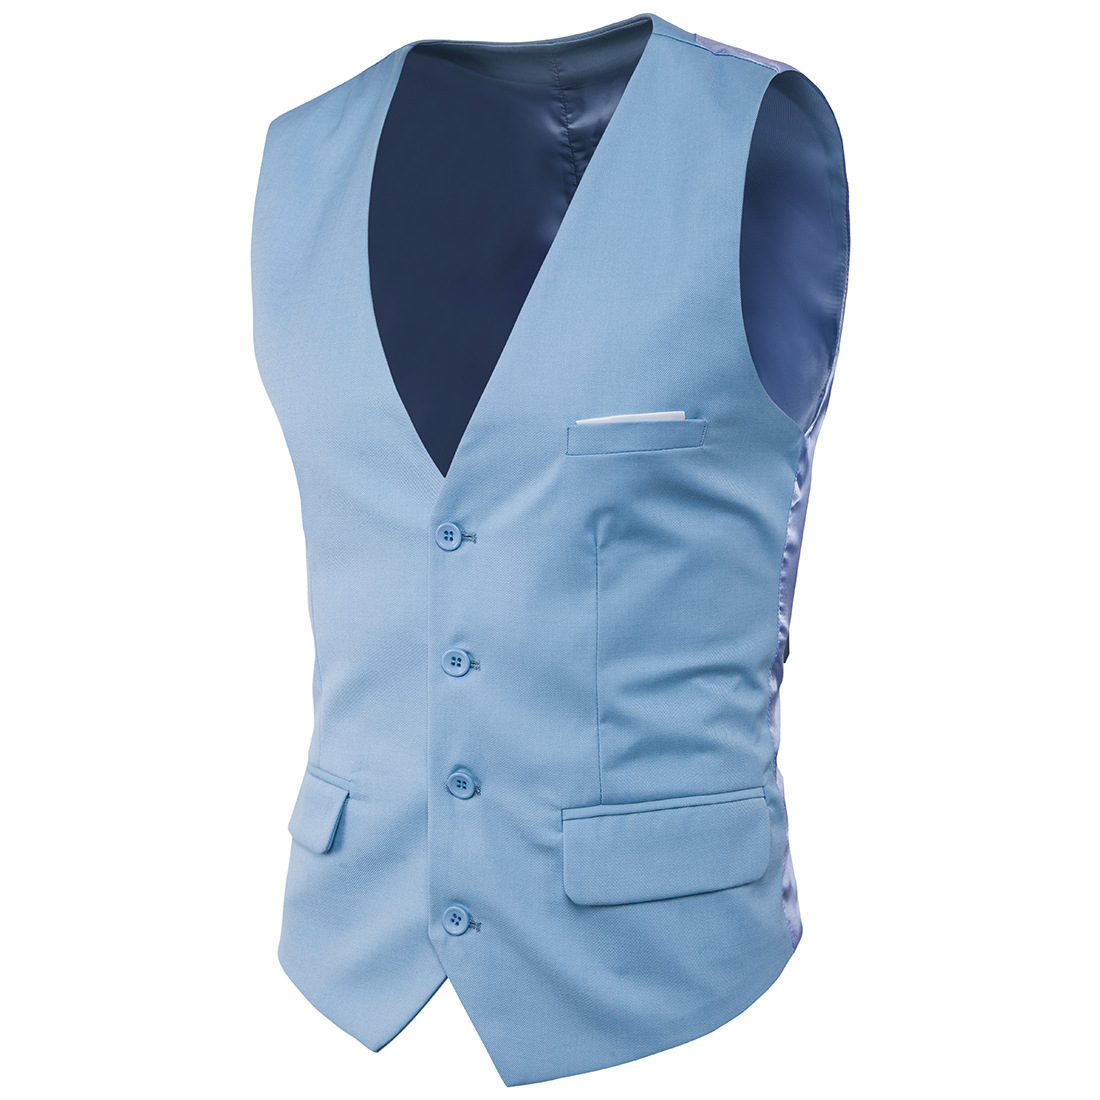  Men Suit Waistcoat Single Breasted Vest Jacket Casual Business Slim Fit Sleeveless Coat baby blue